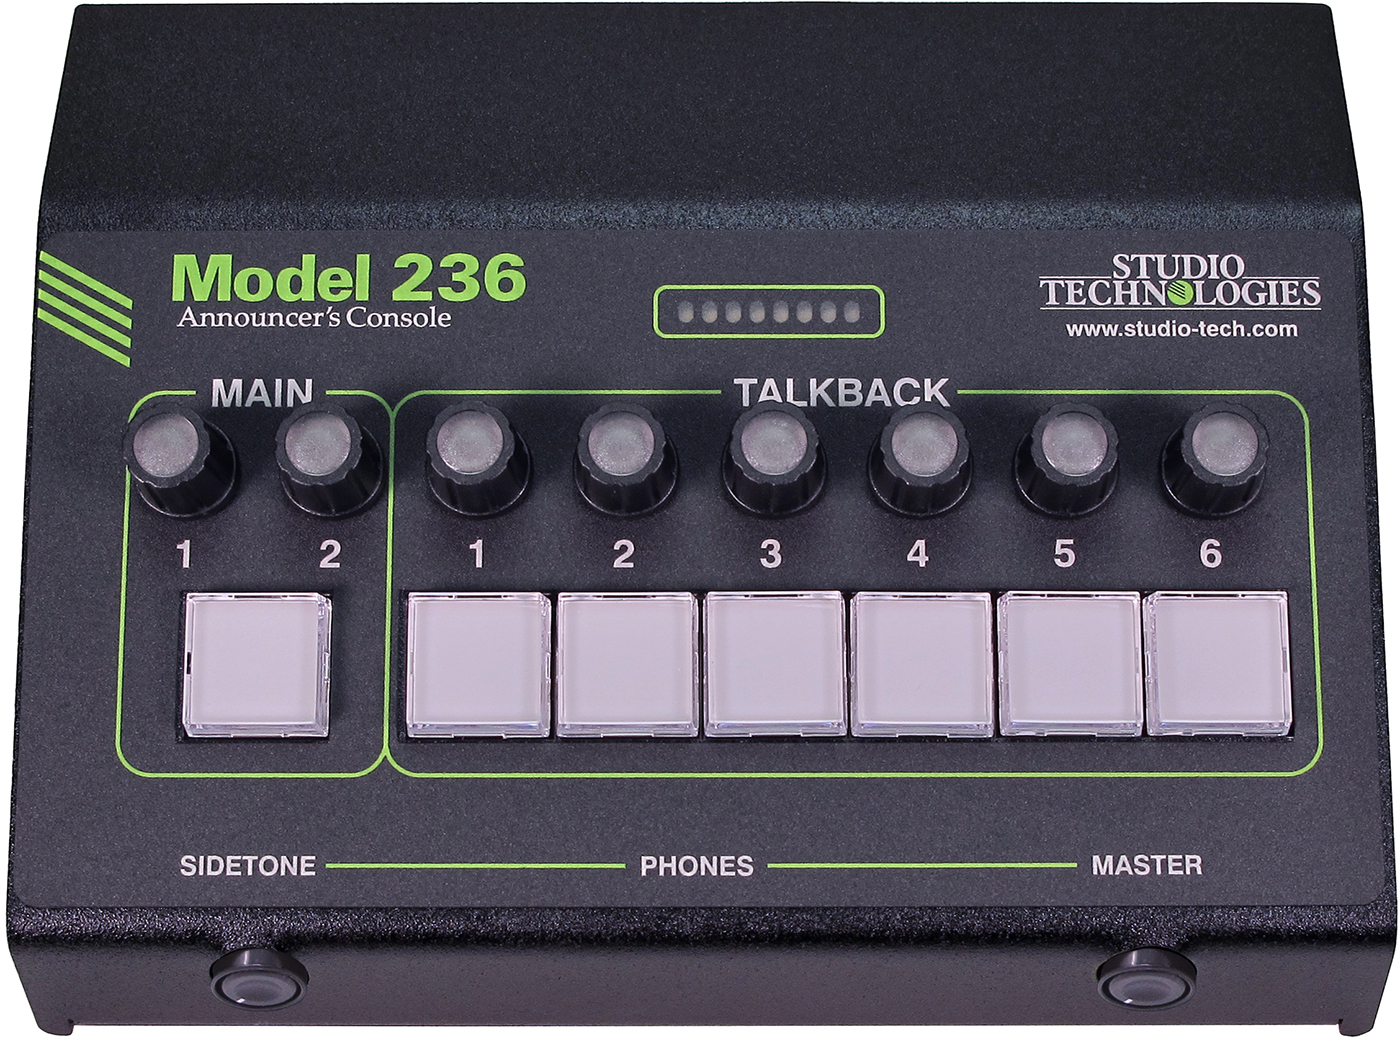 Model 236 Announcer’s Console